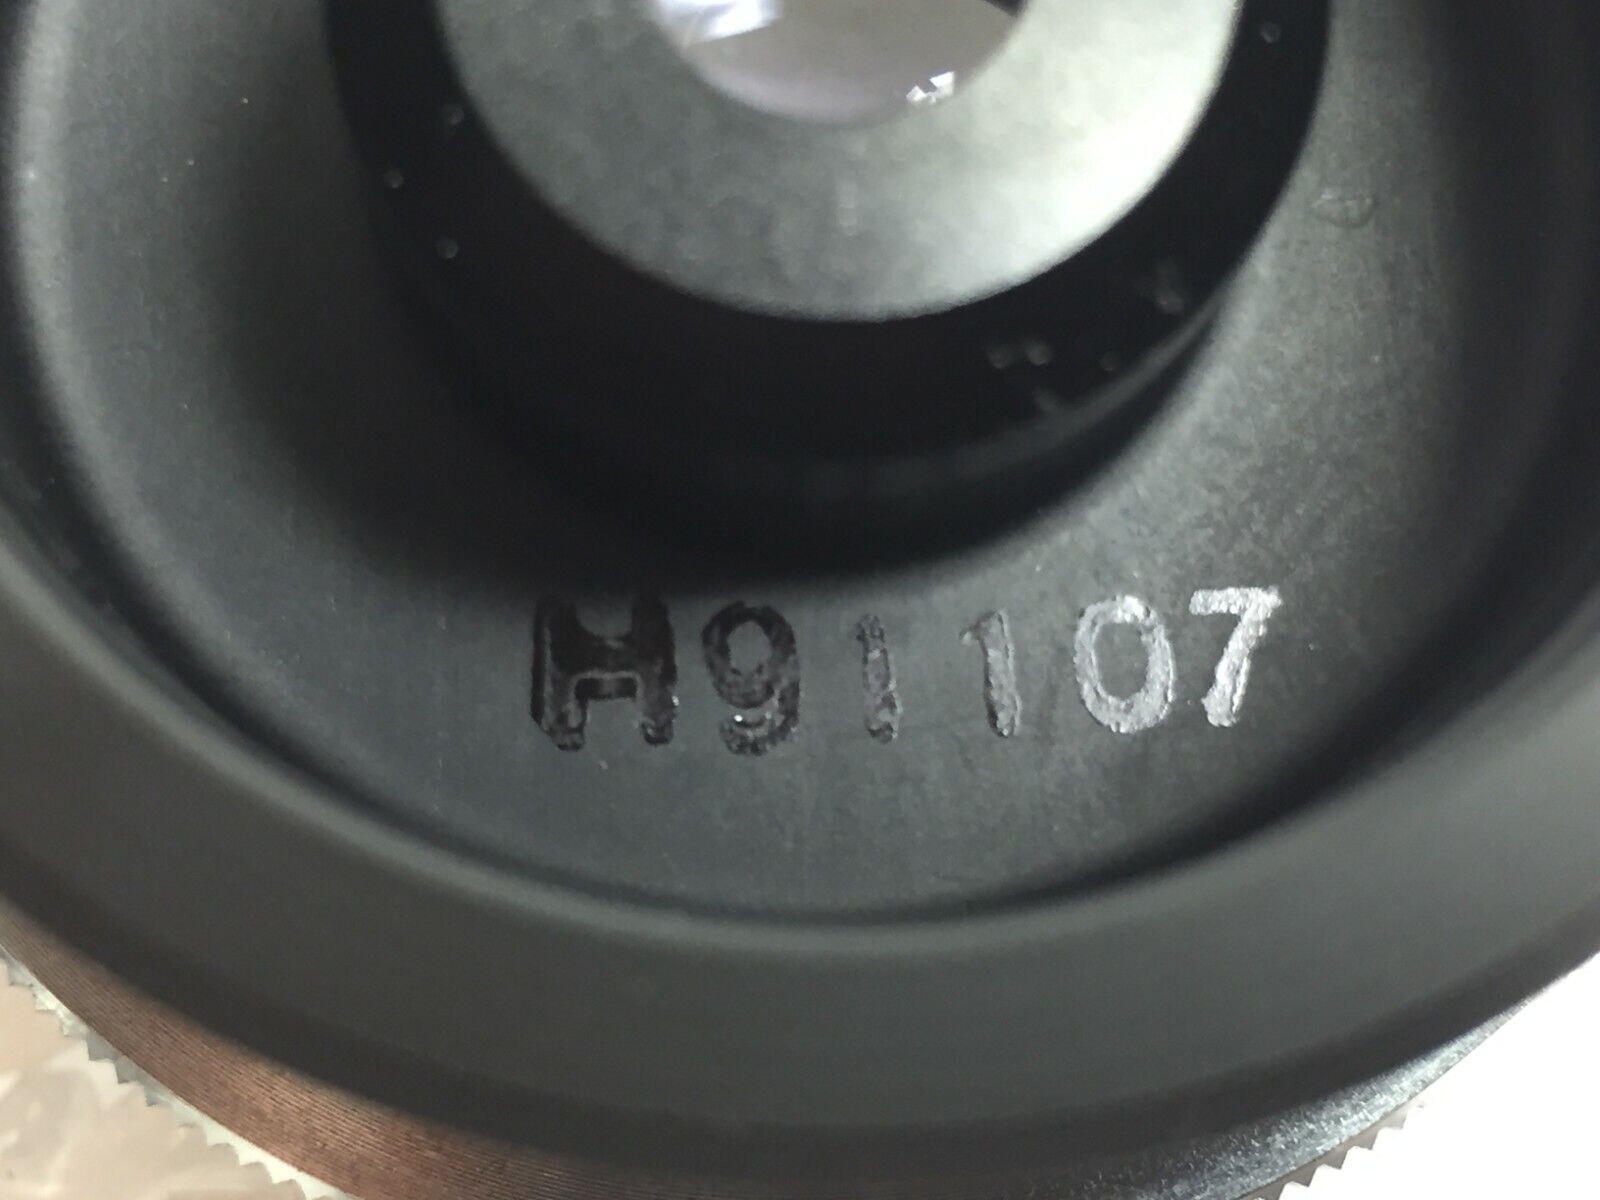 Microscope Lens H91107